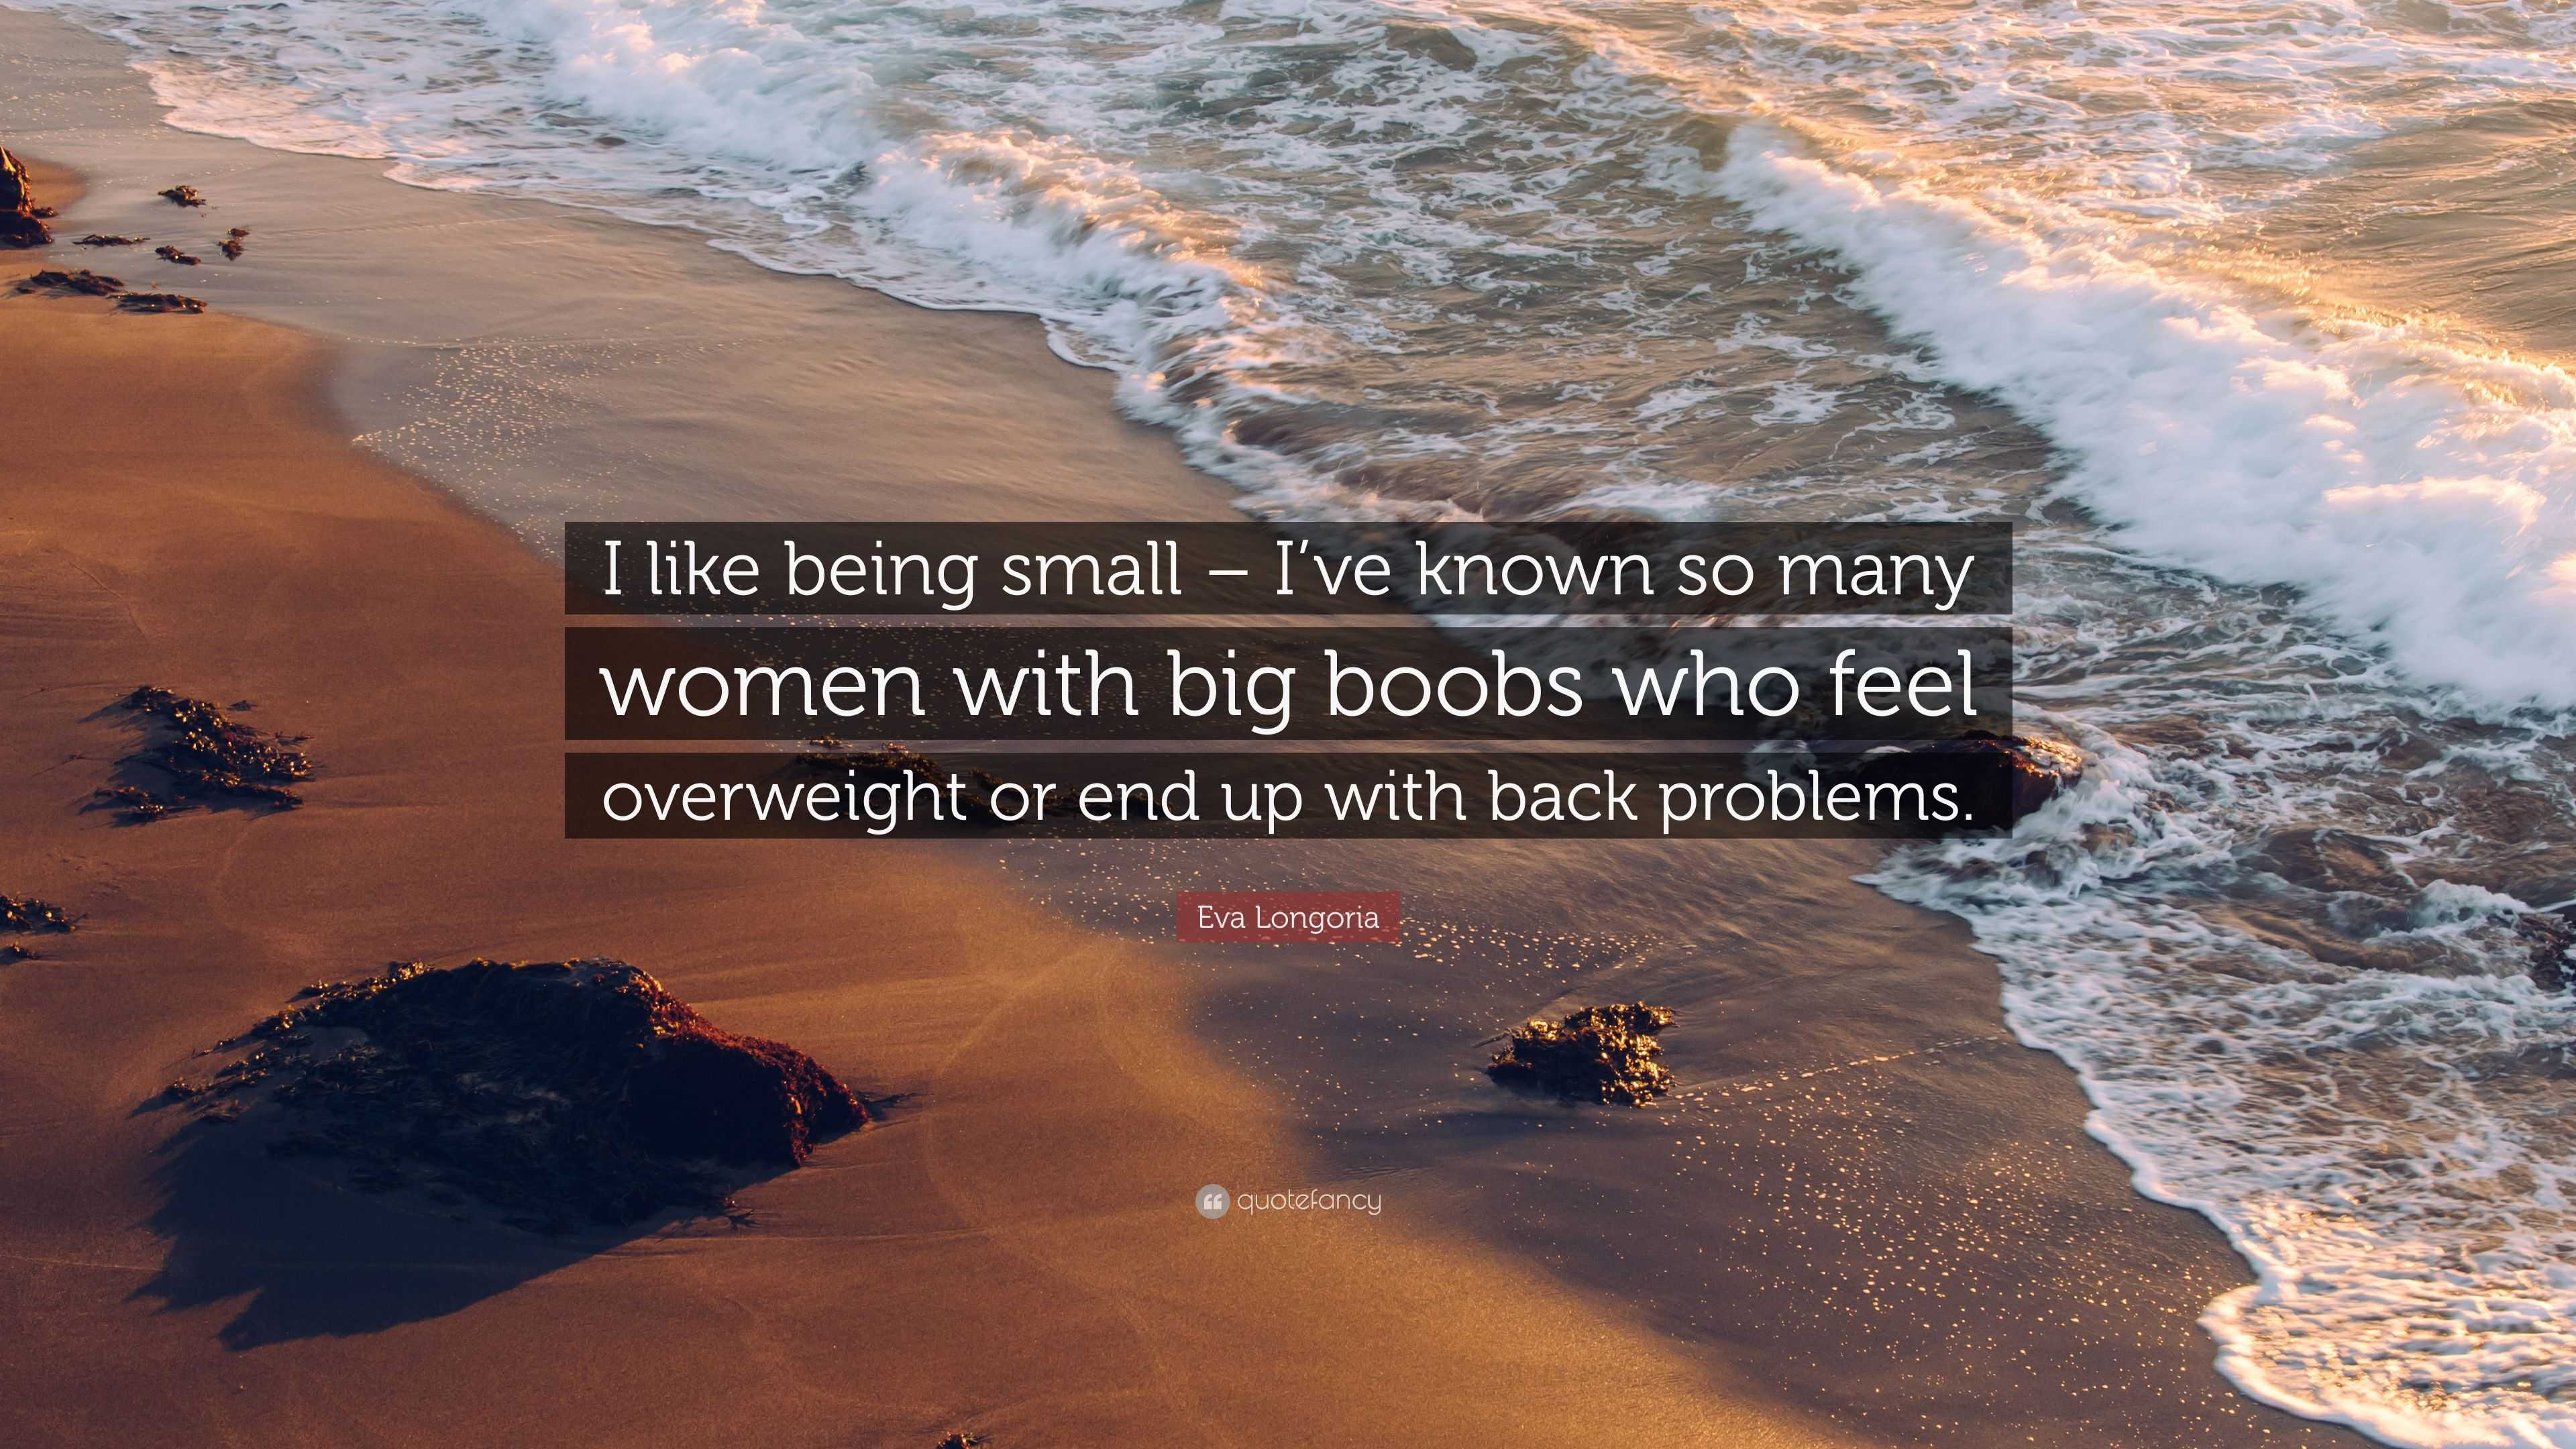 https://quotefancy.com/media/wallpaper/3840x2160/2742325-Eva-Longoria-Quote-I-like-being-small-I-ve-known-so-many-women.jpg